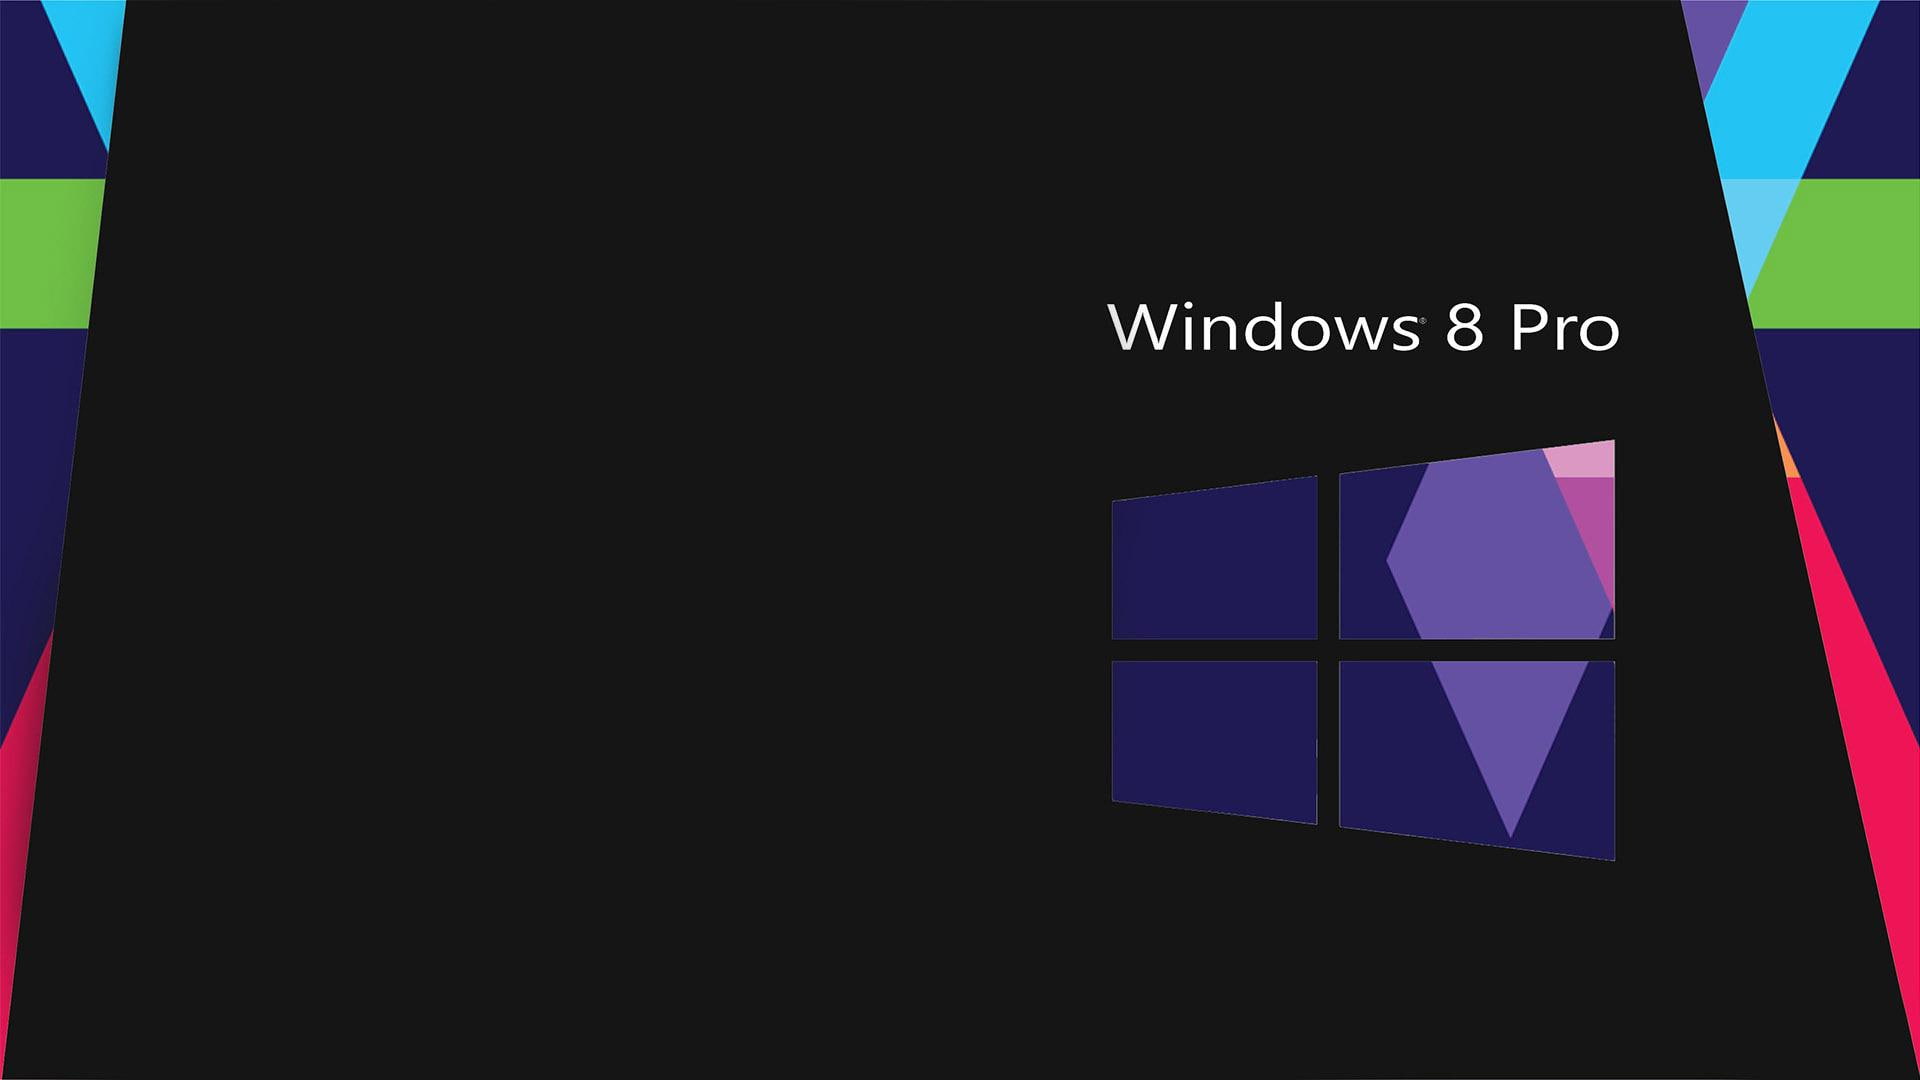 Windows 8 Pro, window 8 pro wallpaper, computers, 1920x1080